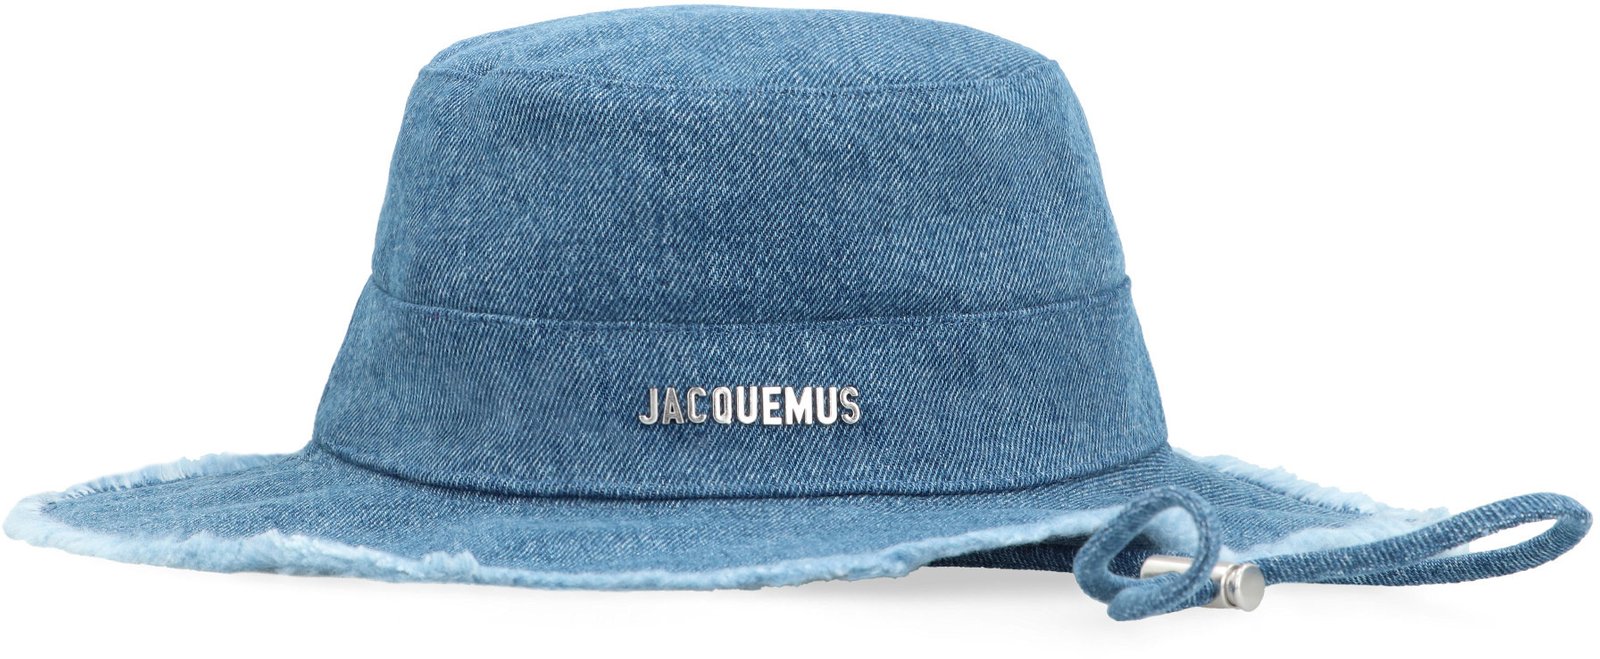 Jacquemus 로고 플라크 버킷 모자